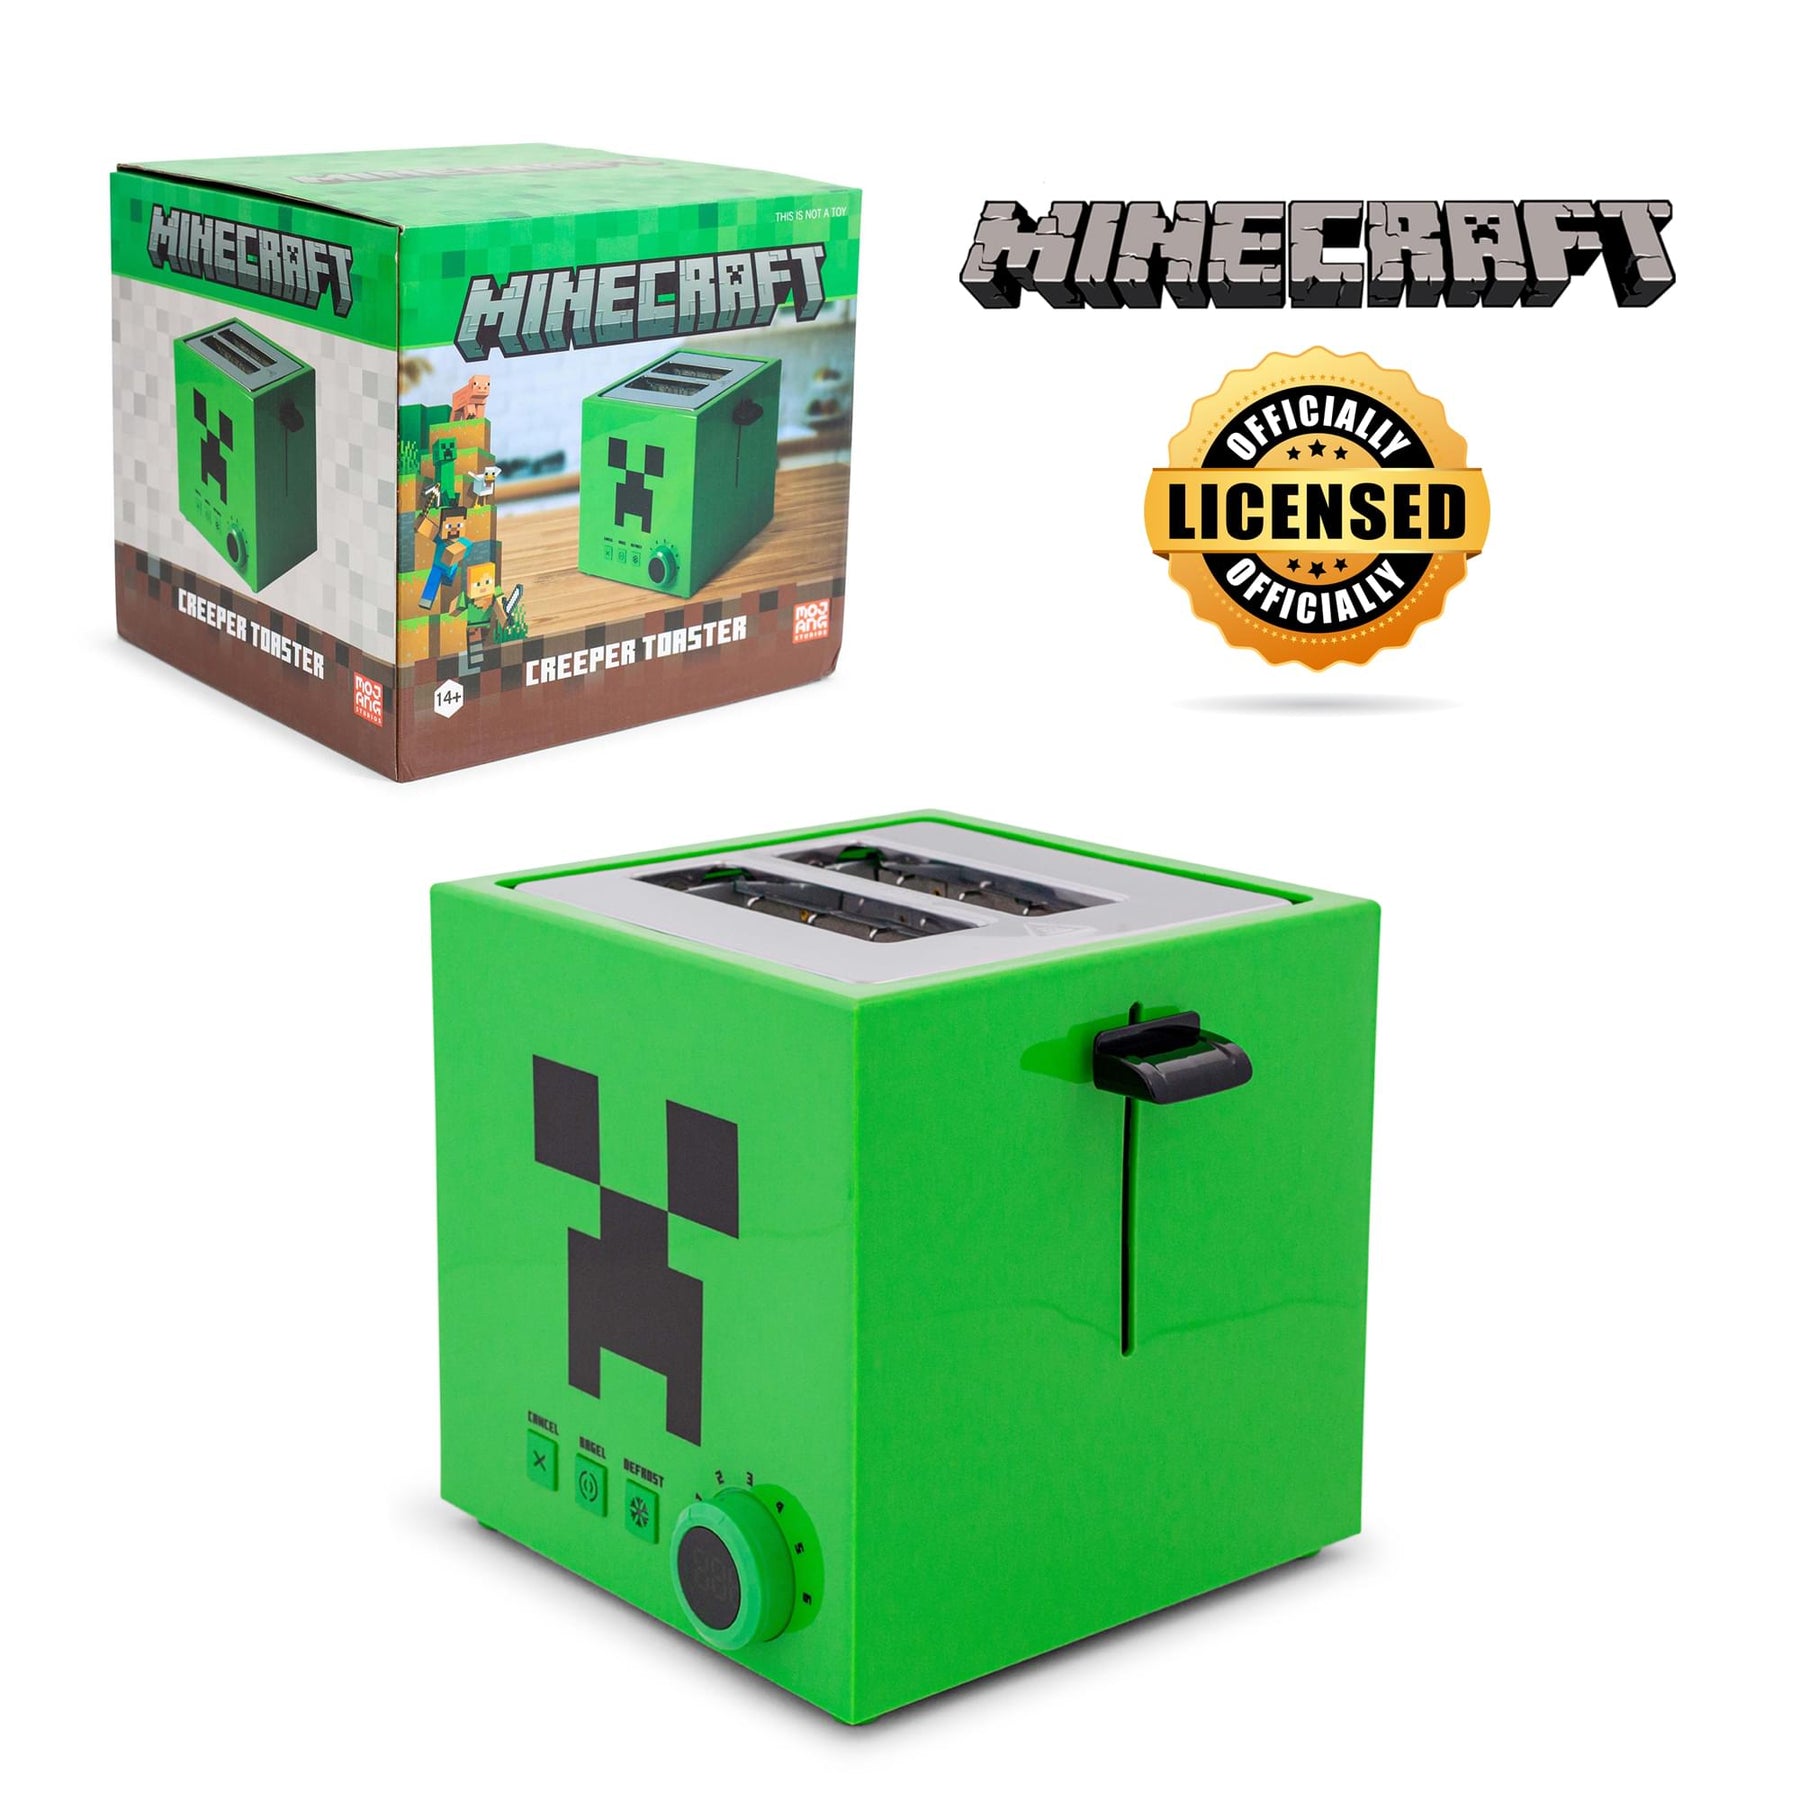 Minecraft Green Creeper Toaster